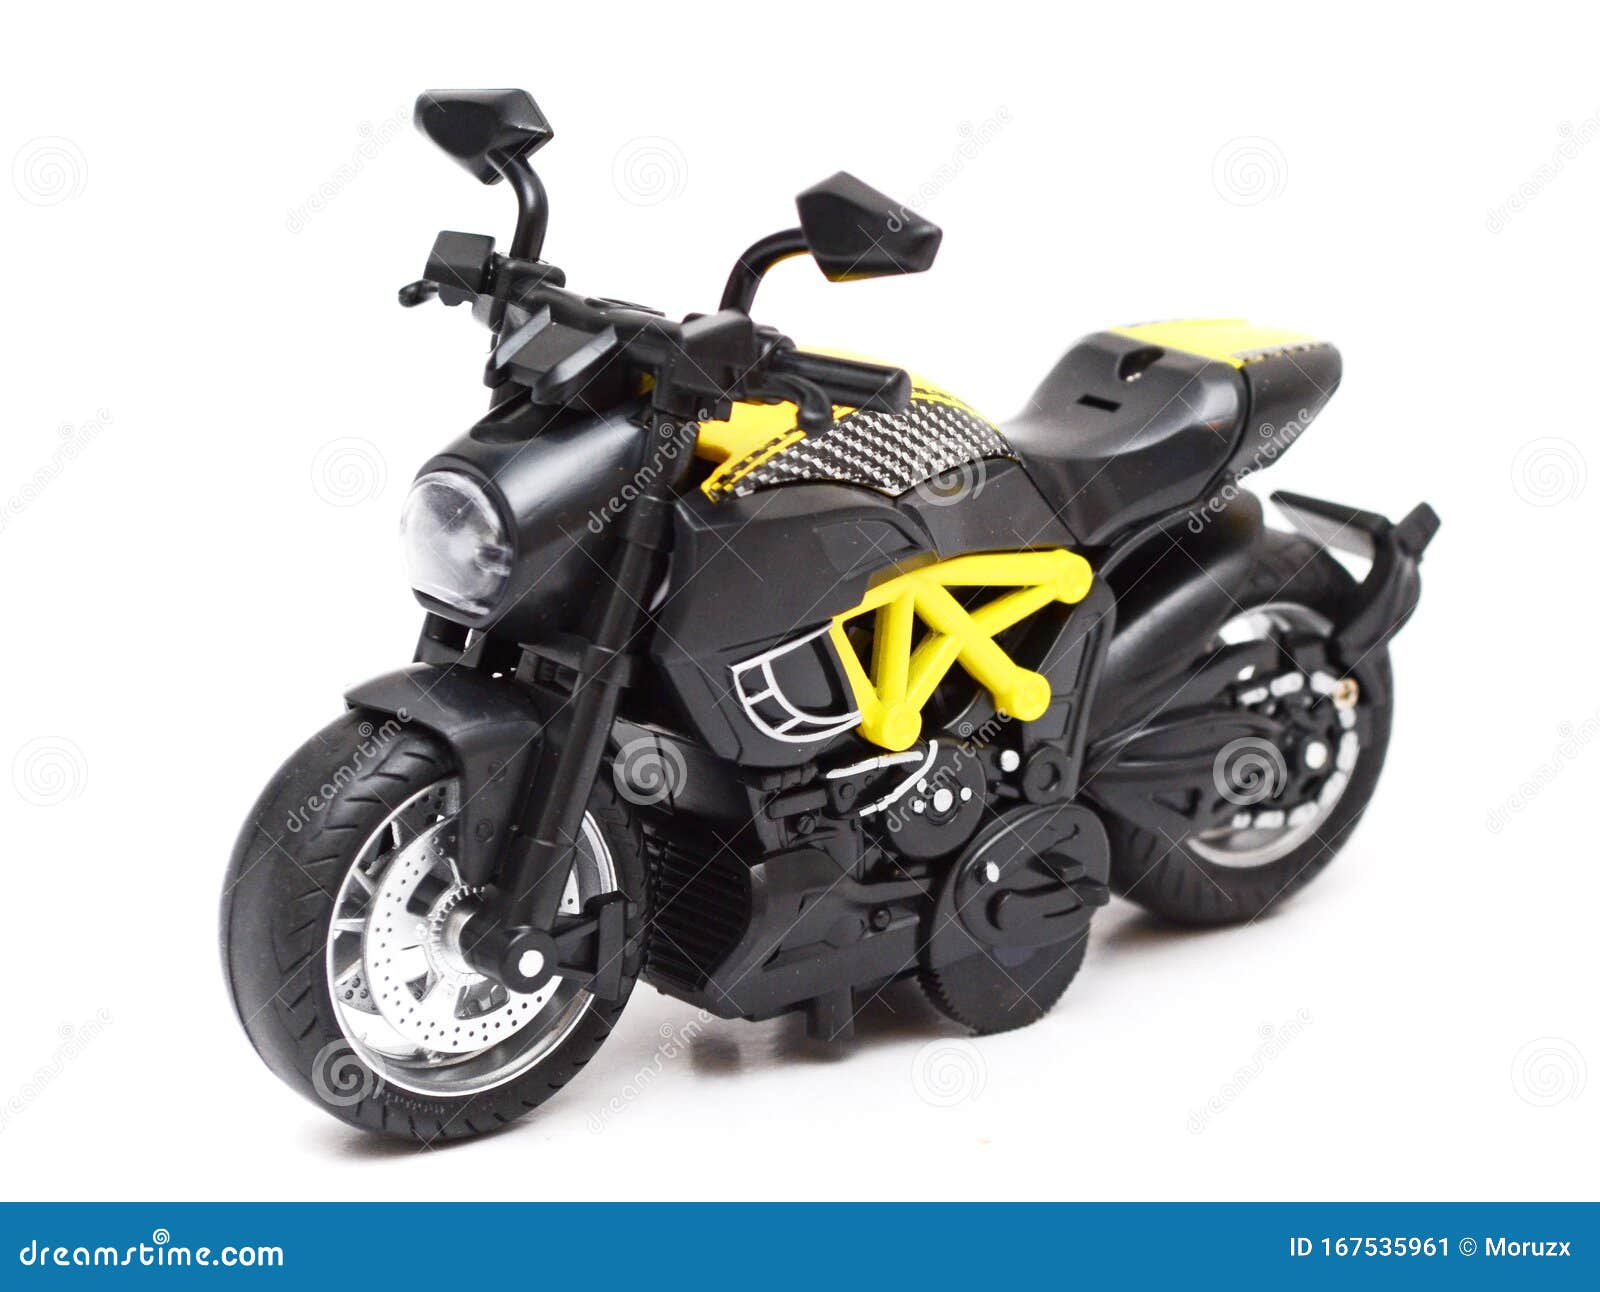 miniature motorcycle toy  on white